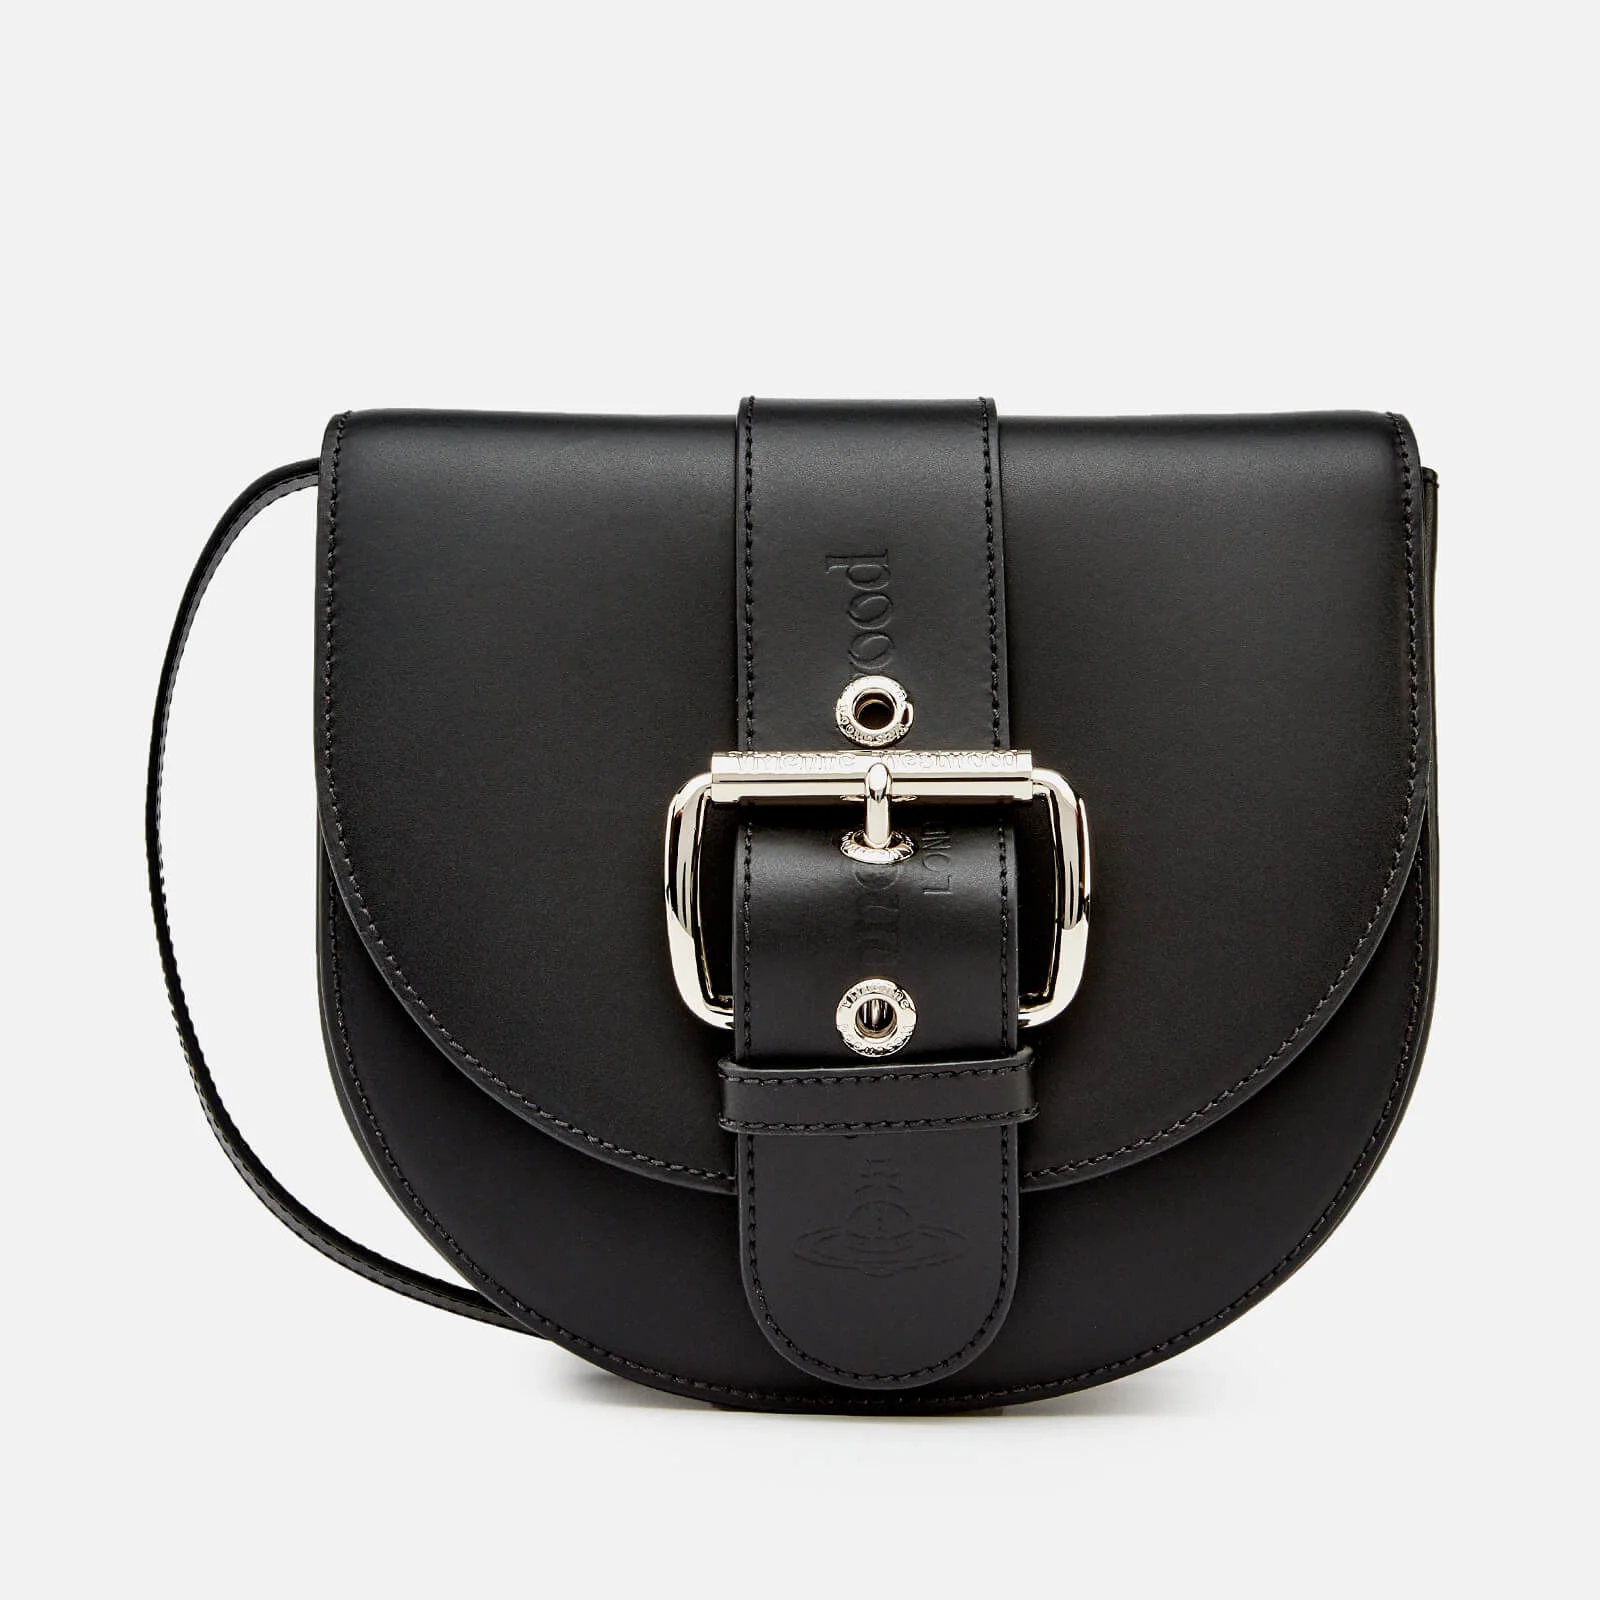 Vivienne Westwood Women's Alex Saddle Bag - Black Image 1